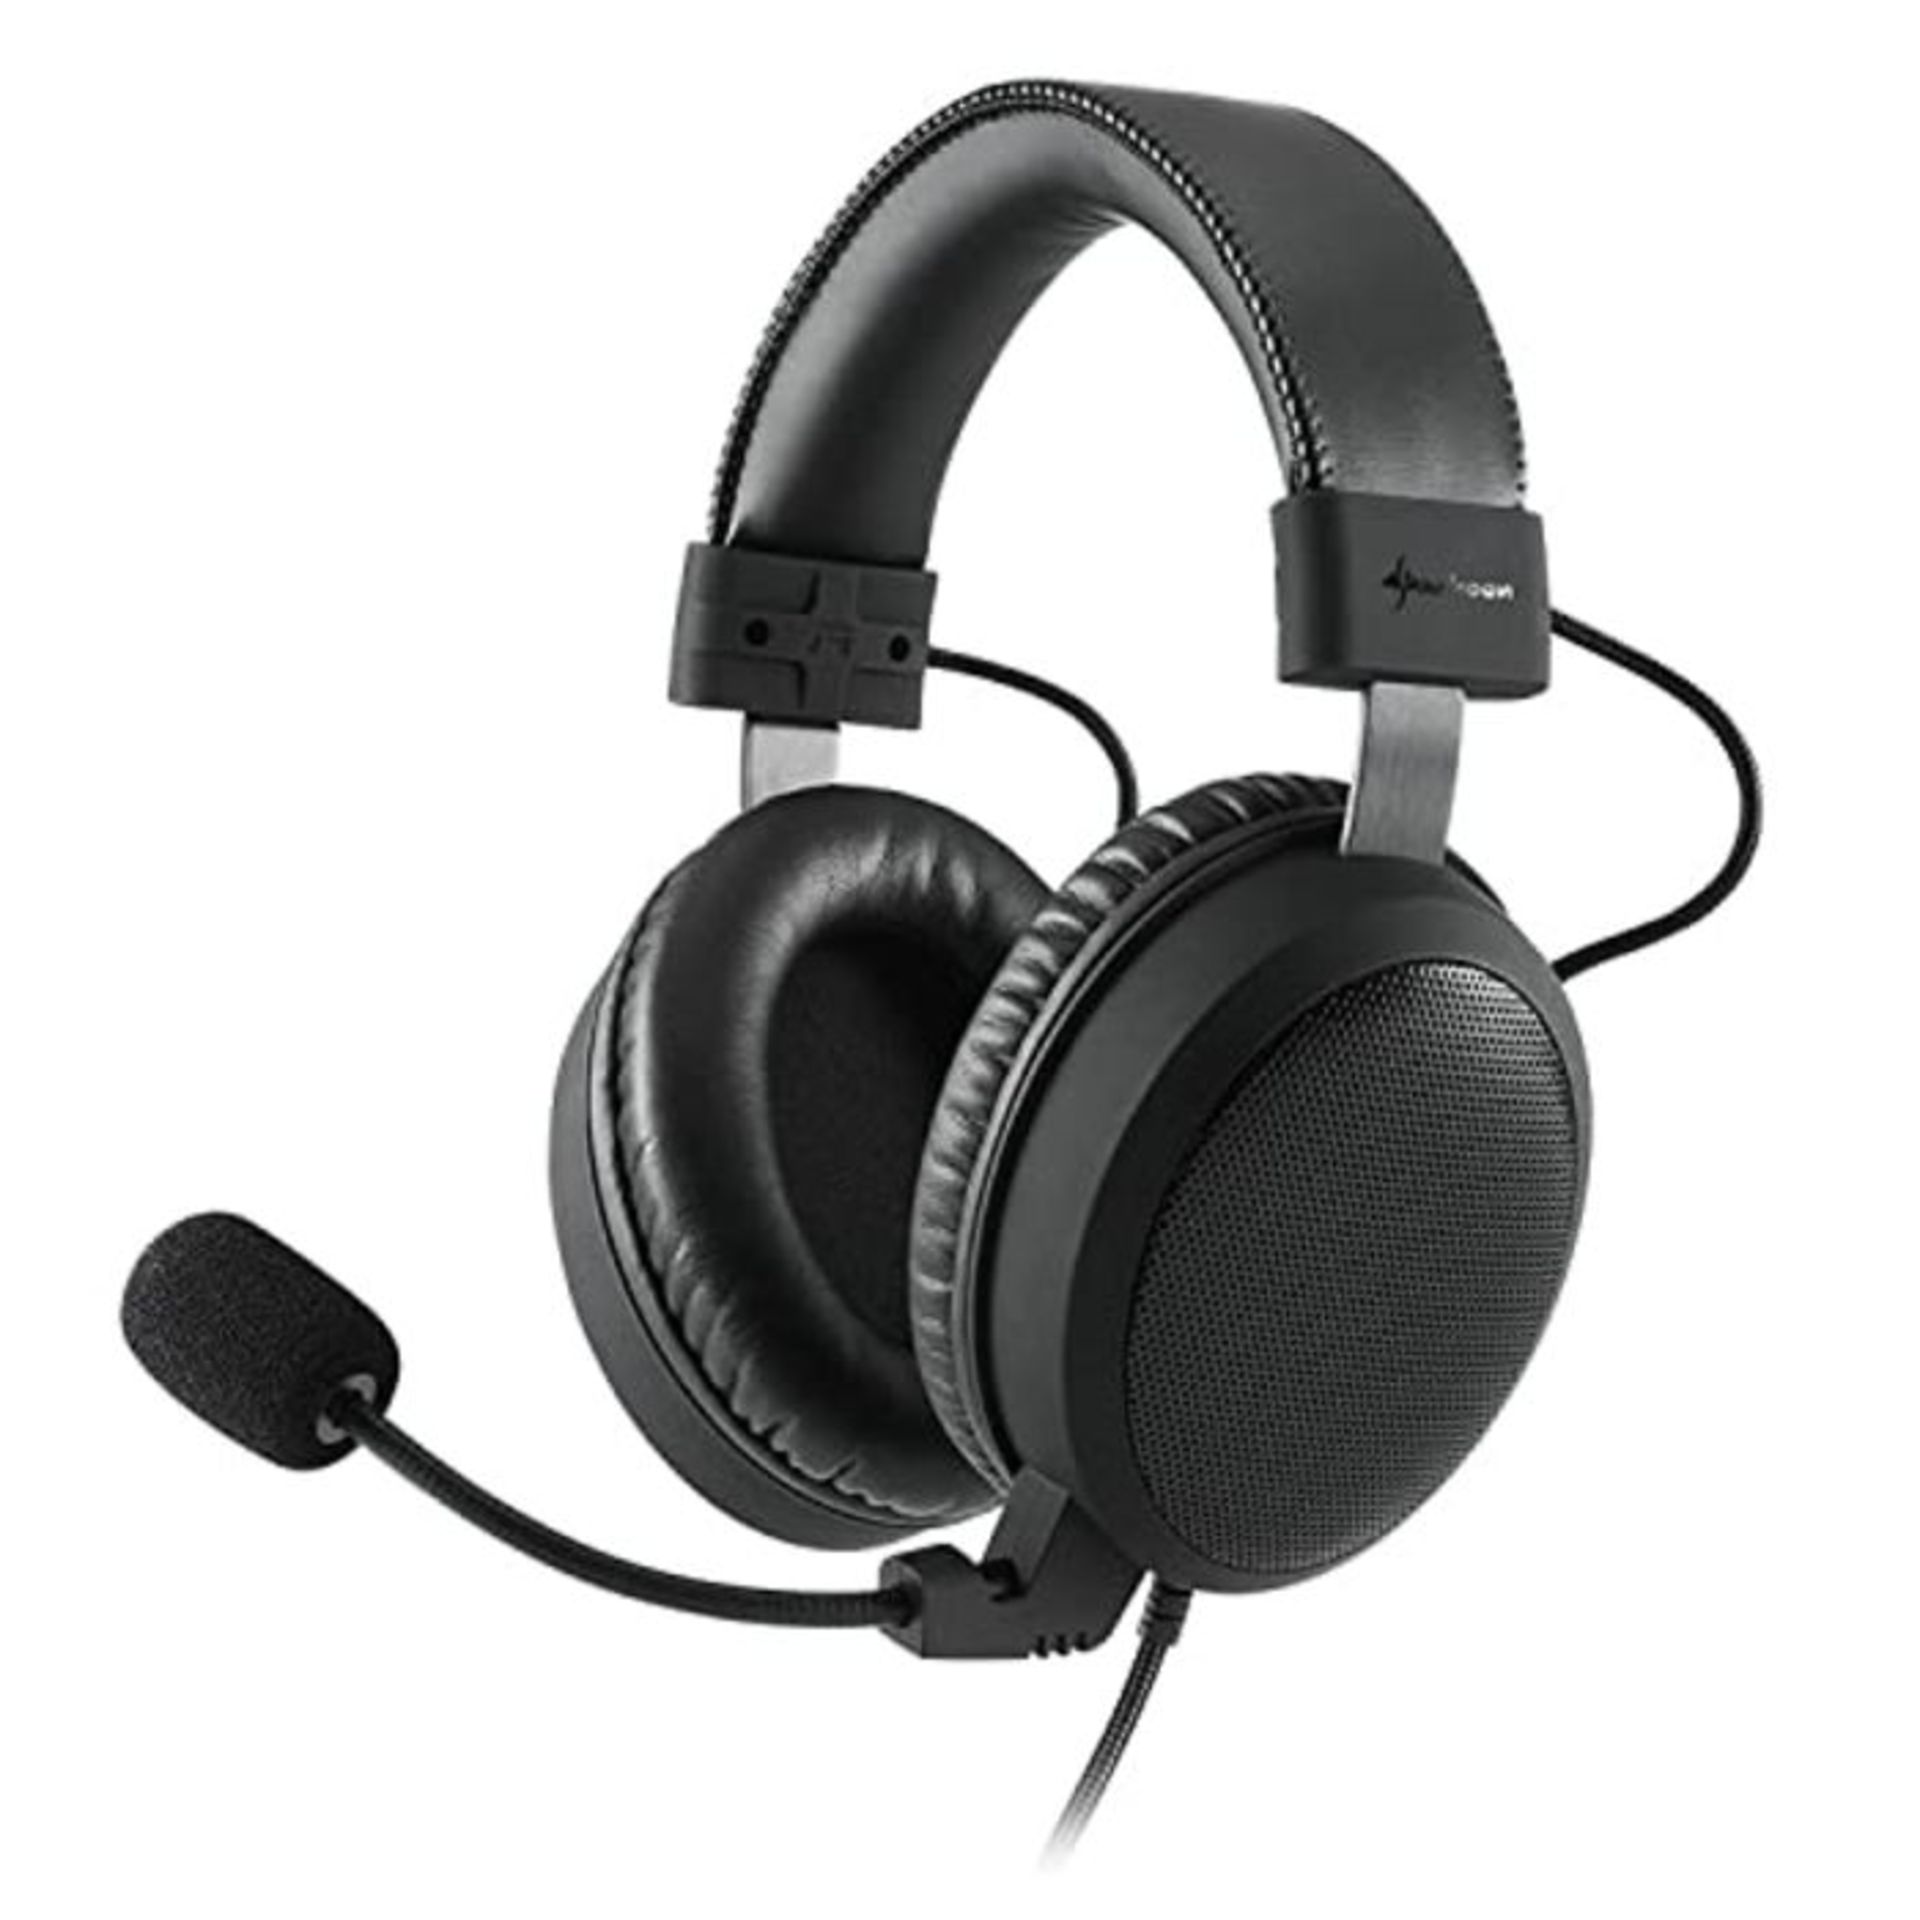 Sharkoon B1 Stereo Gaming Headphones - Black